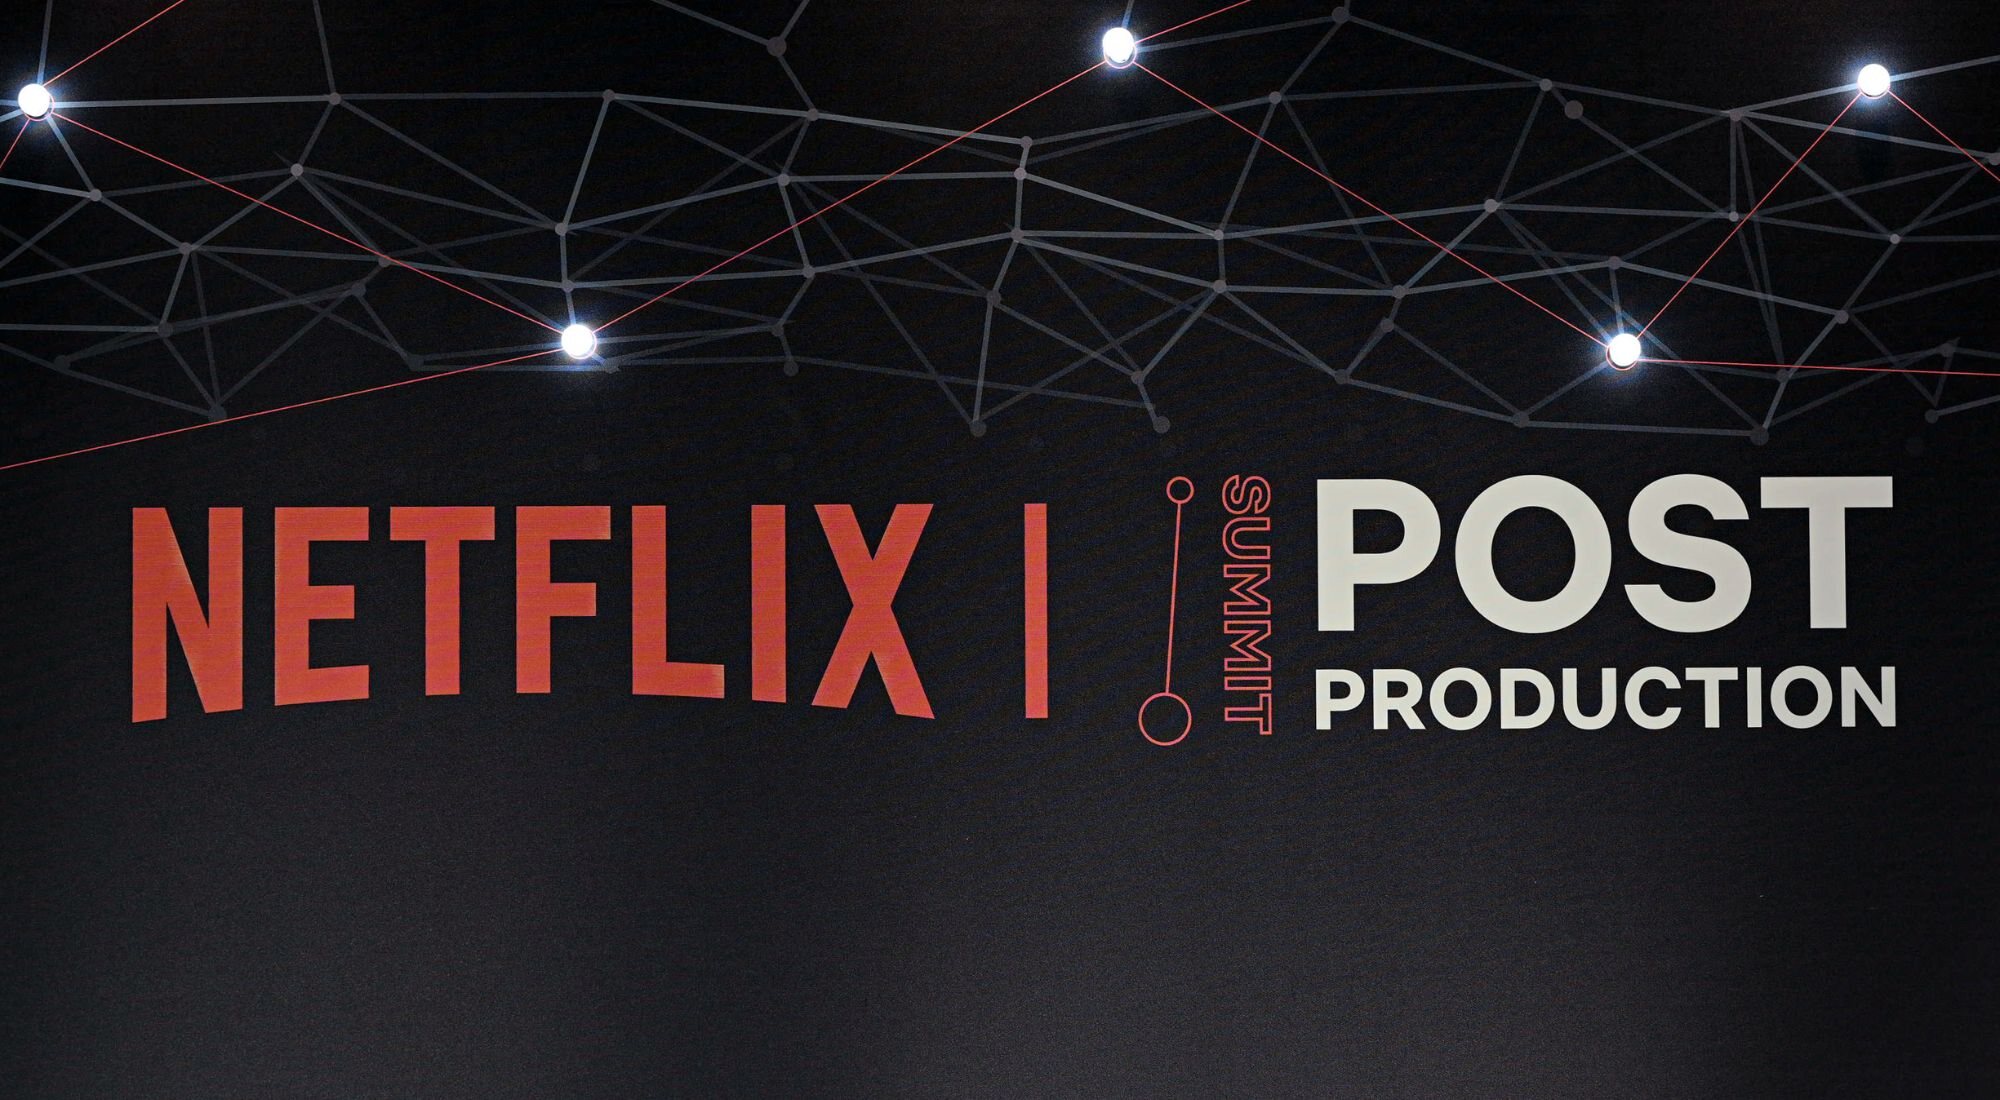 Netflix celebra el Post Production Summit